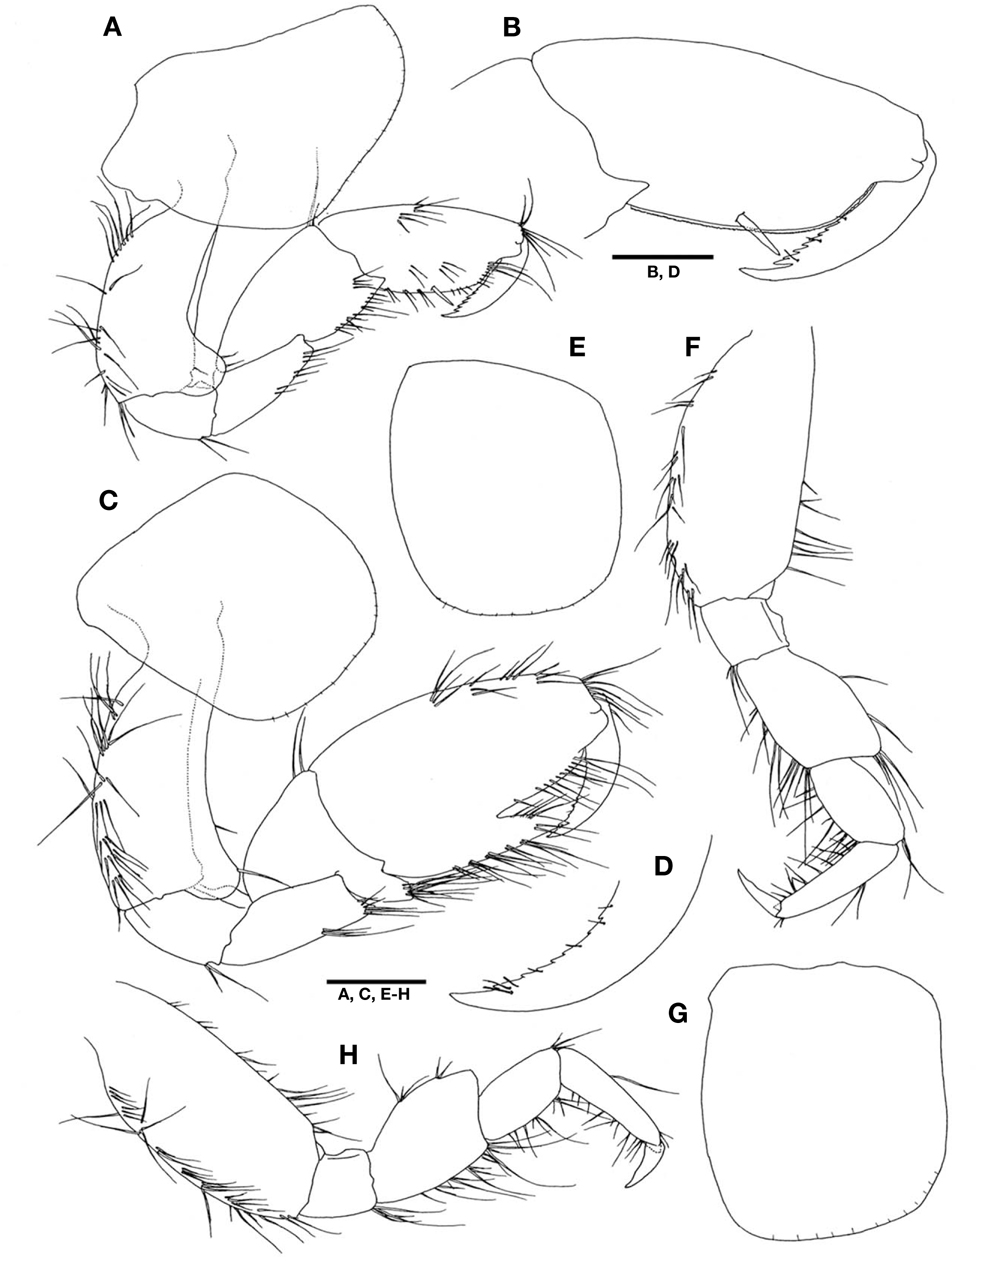 Ampithoe akuolaka  Barnard, 1970, male (A-H). A, Gnathopod 1; B, Propodus and dactylus of gnathopod 1; C, Gnathopod 2; D, Dactylus of gnathopod 2; E, Coxa 3; F, Pereopod 3; G, Coxa 4; H, Pereopod 4. Scale bars: A, C, E-H=0.5 mm, B, D=0.25 mm.